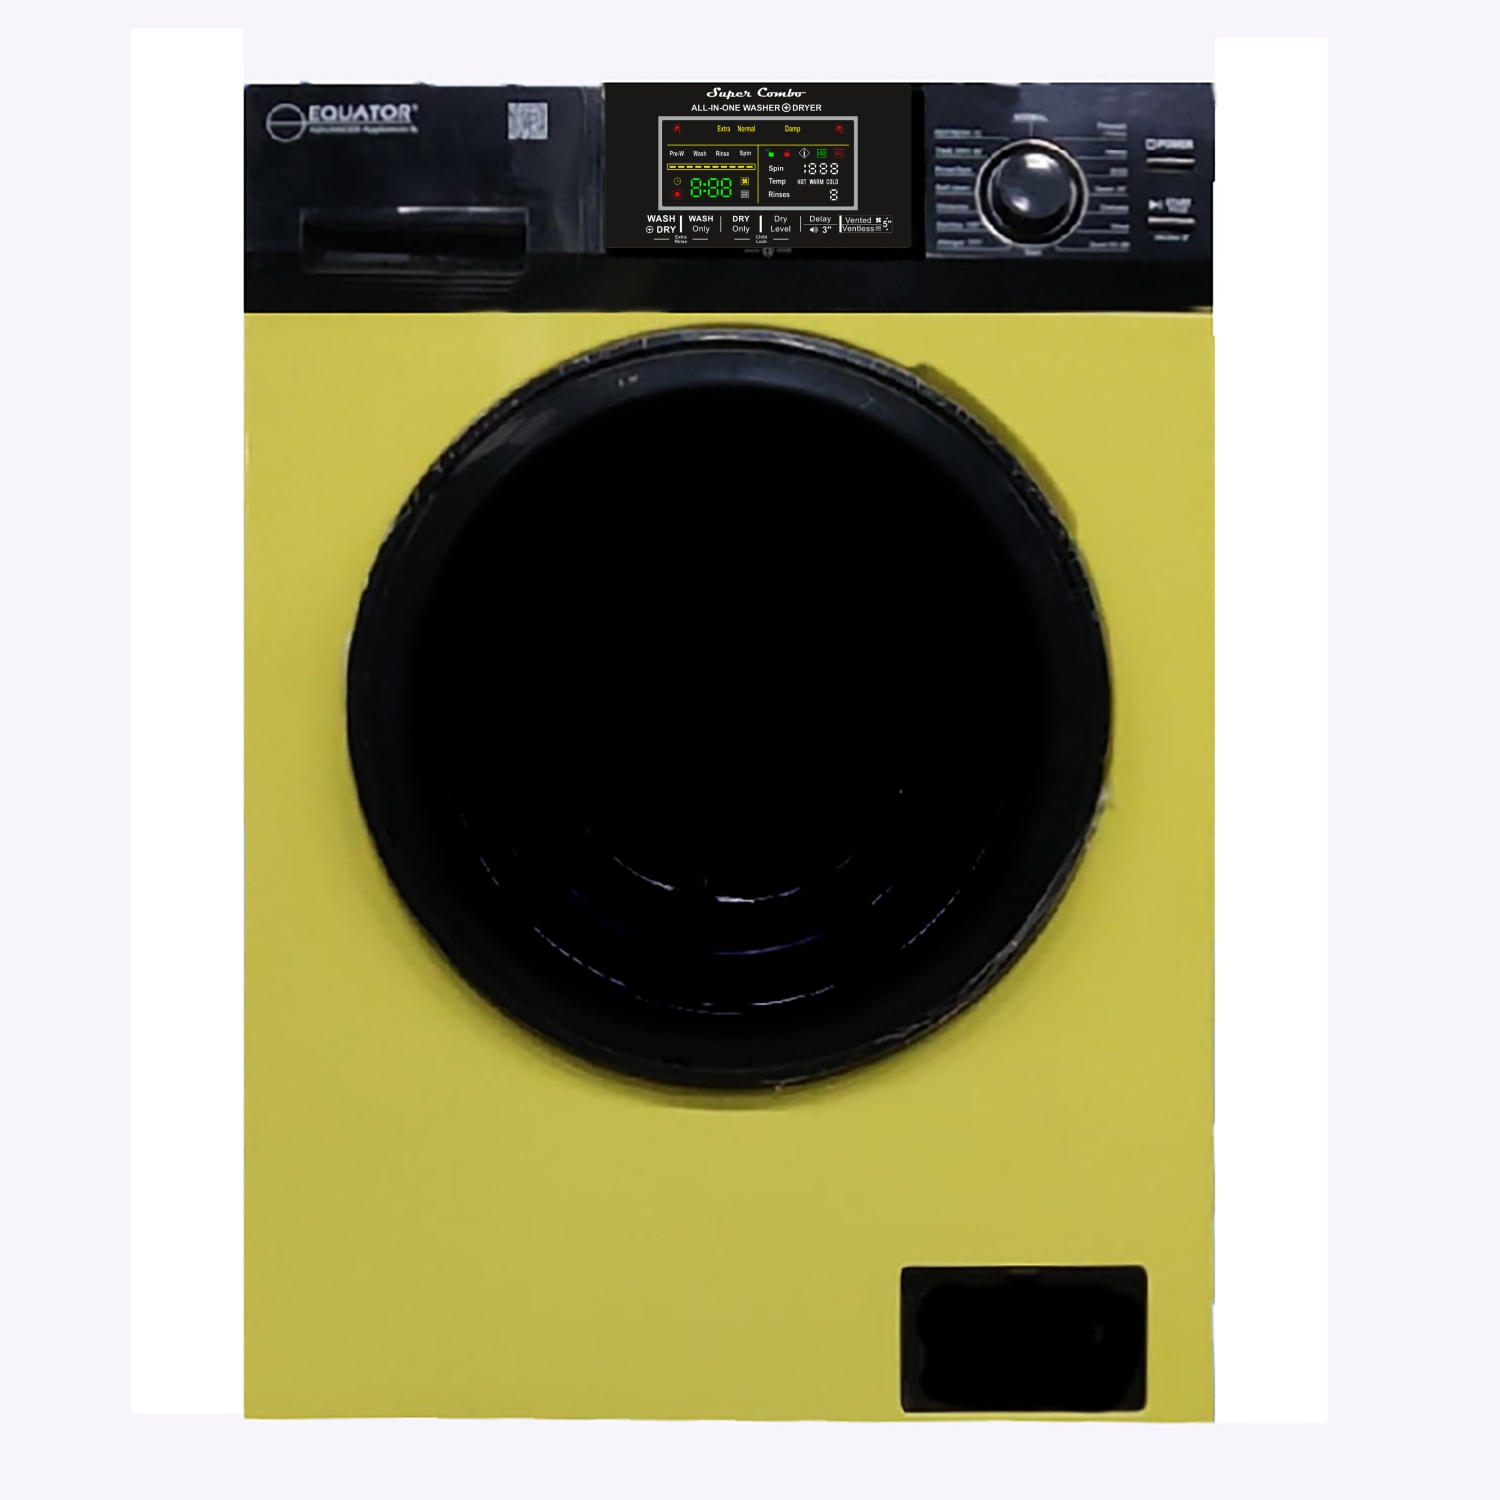 Equator Digital Compact 110V Vented/Ventless 18 lbs Combo Washer Dryer 1400 RPM (EZ 5500 CV - Yellow/Black)